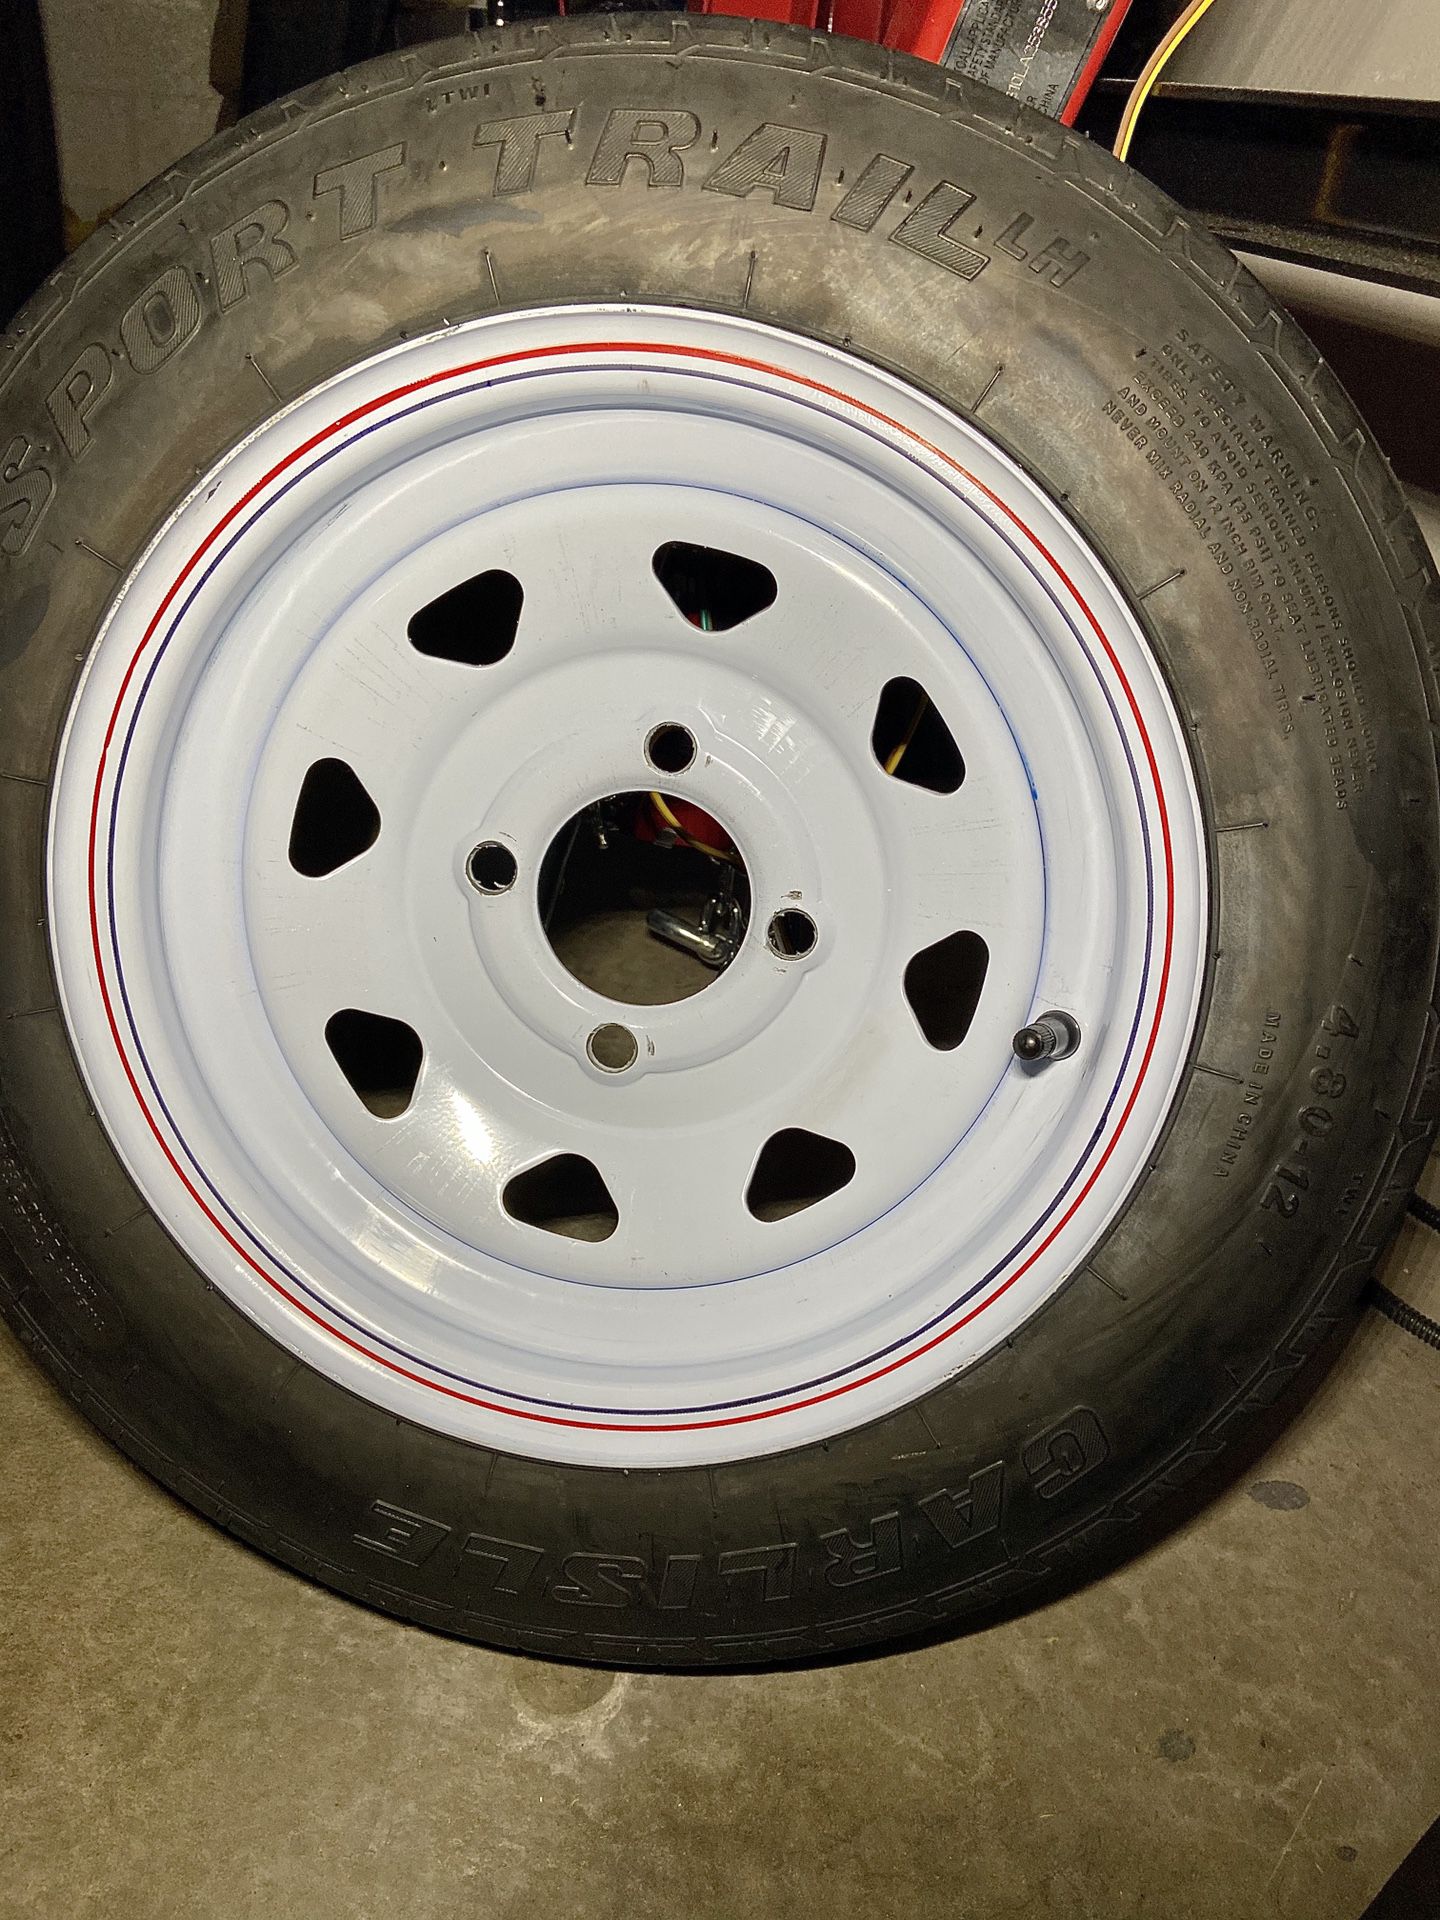 Carlisle 12” trailer white spoke tire on rim